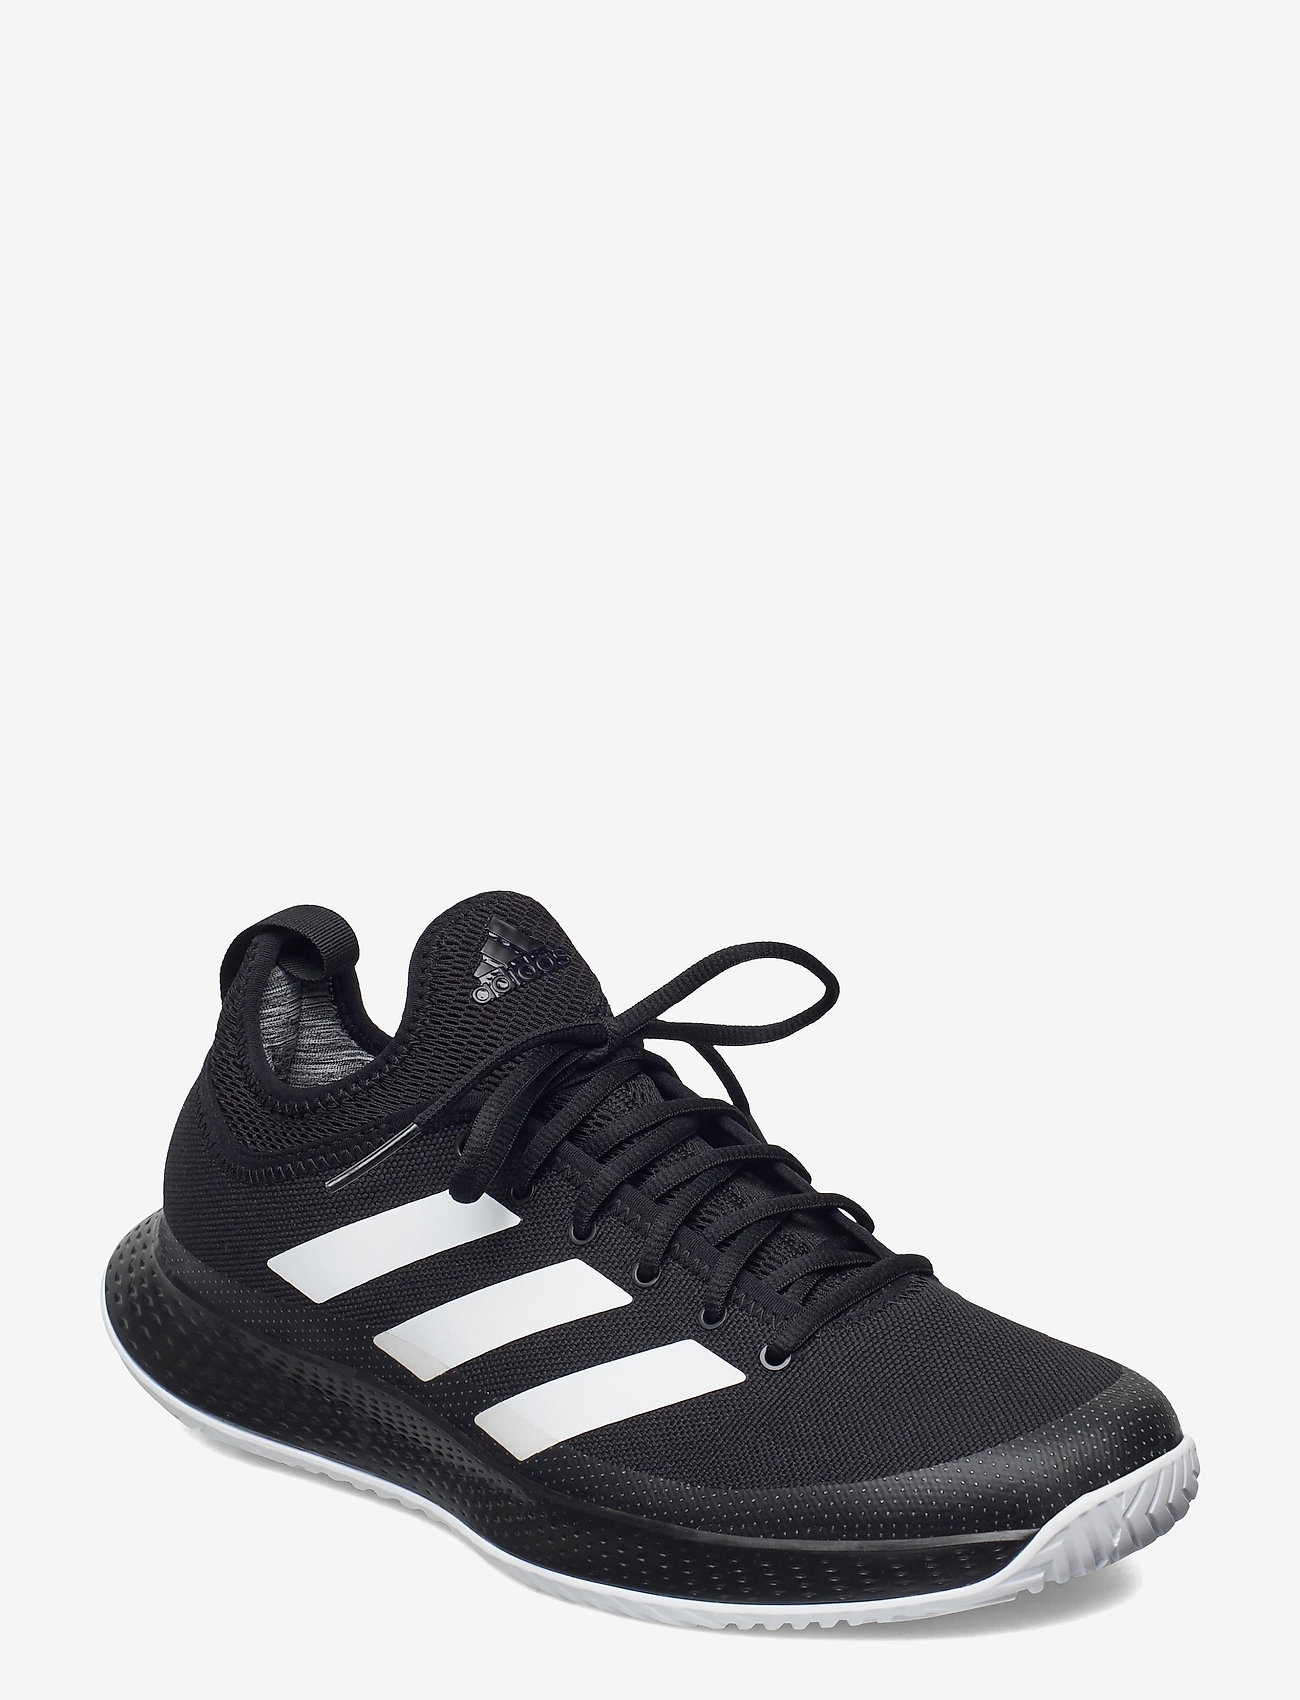 adidas court shoes black